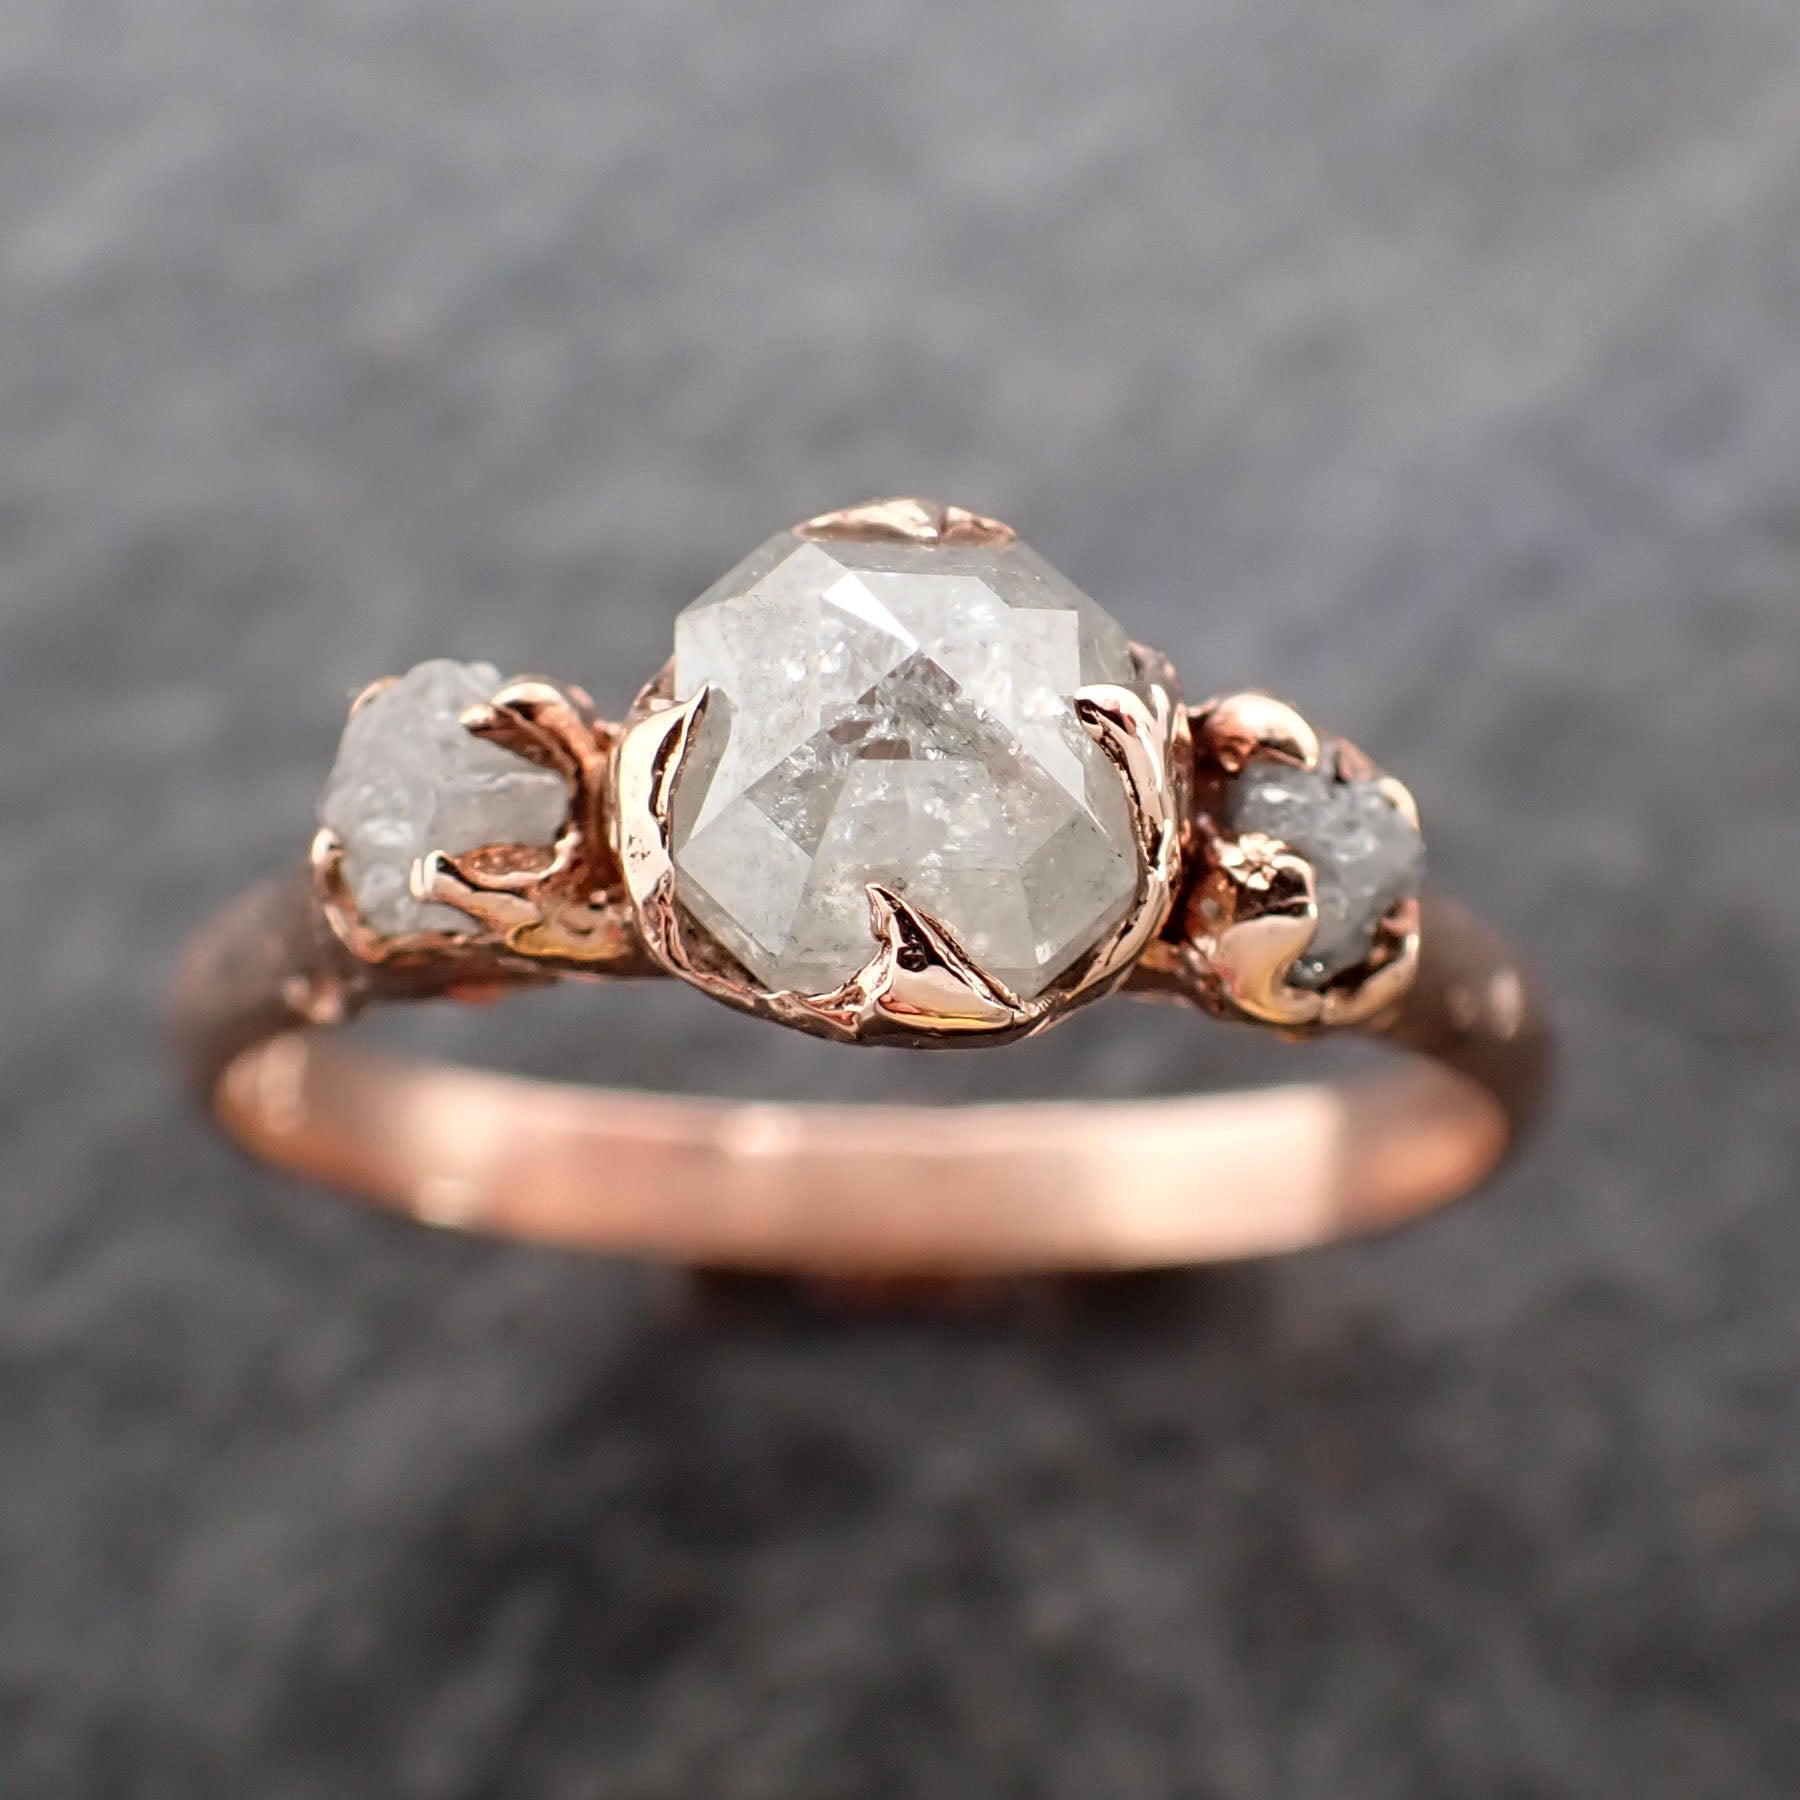 fancy cut white diamond engagement 14k rose gold multi stone wedding ring stacking rough diamond ring byangeline 2565 Alternative Engagement